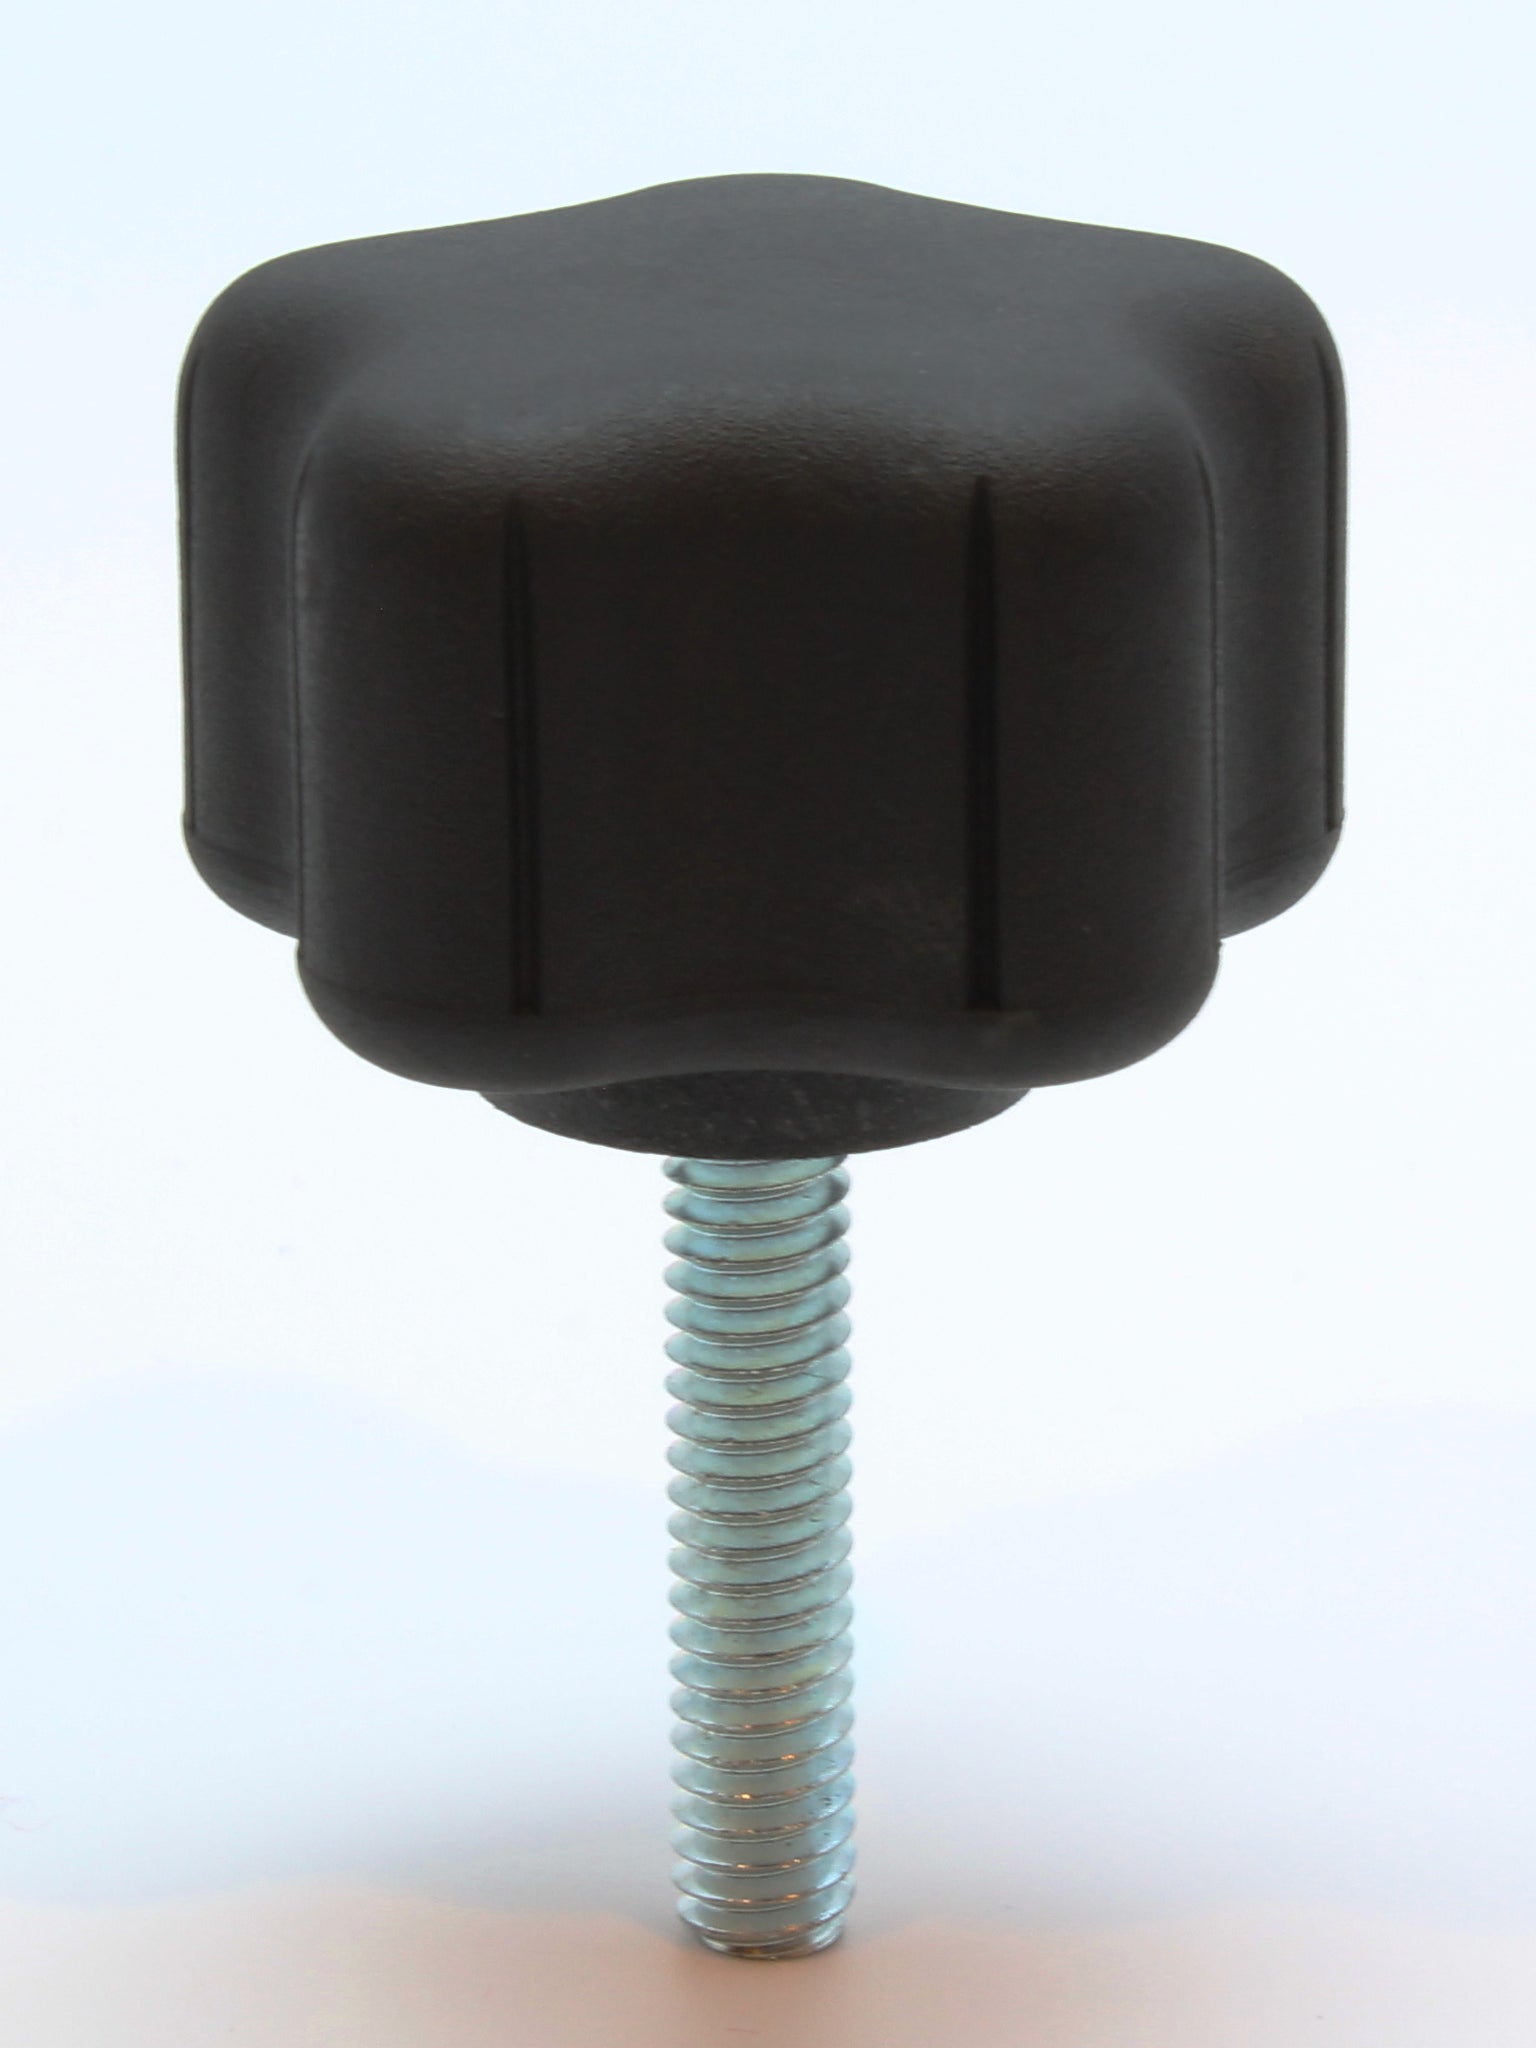 Ergonomic clamp knob, male